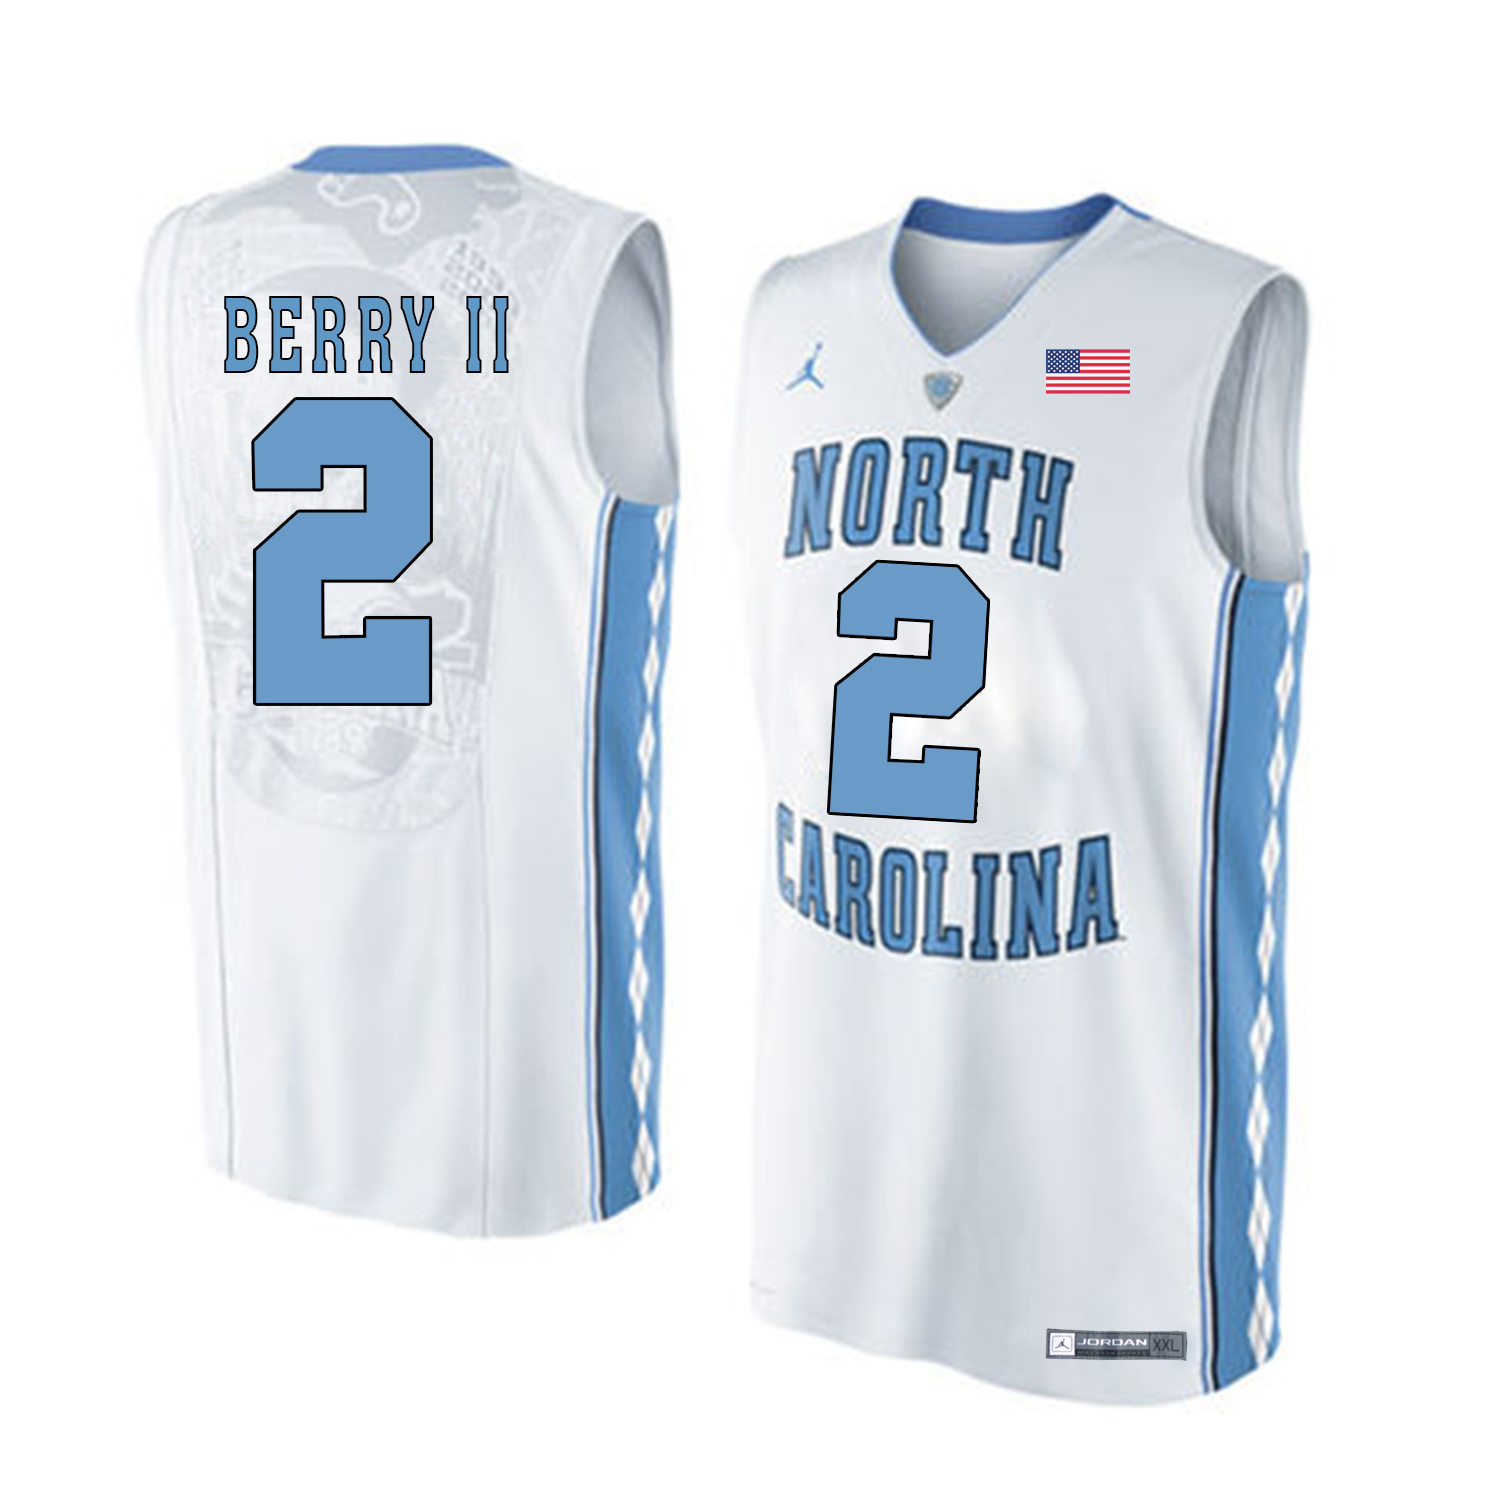 North Carolina Tar Heels 2 Joel Berry II White College Basketball Jersey